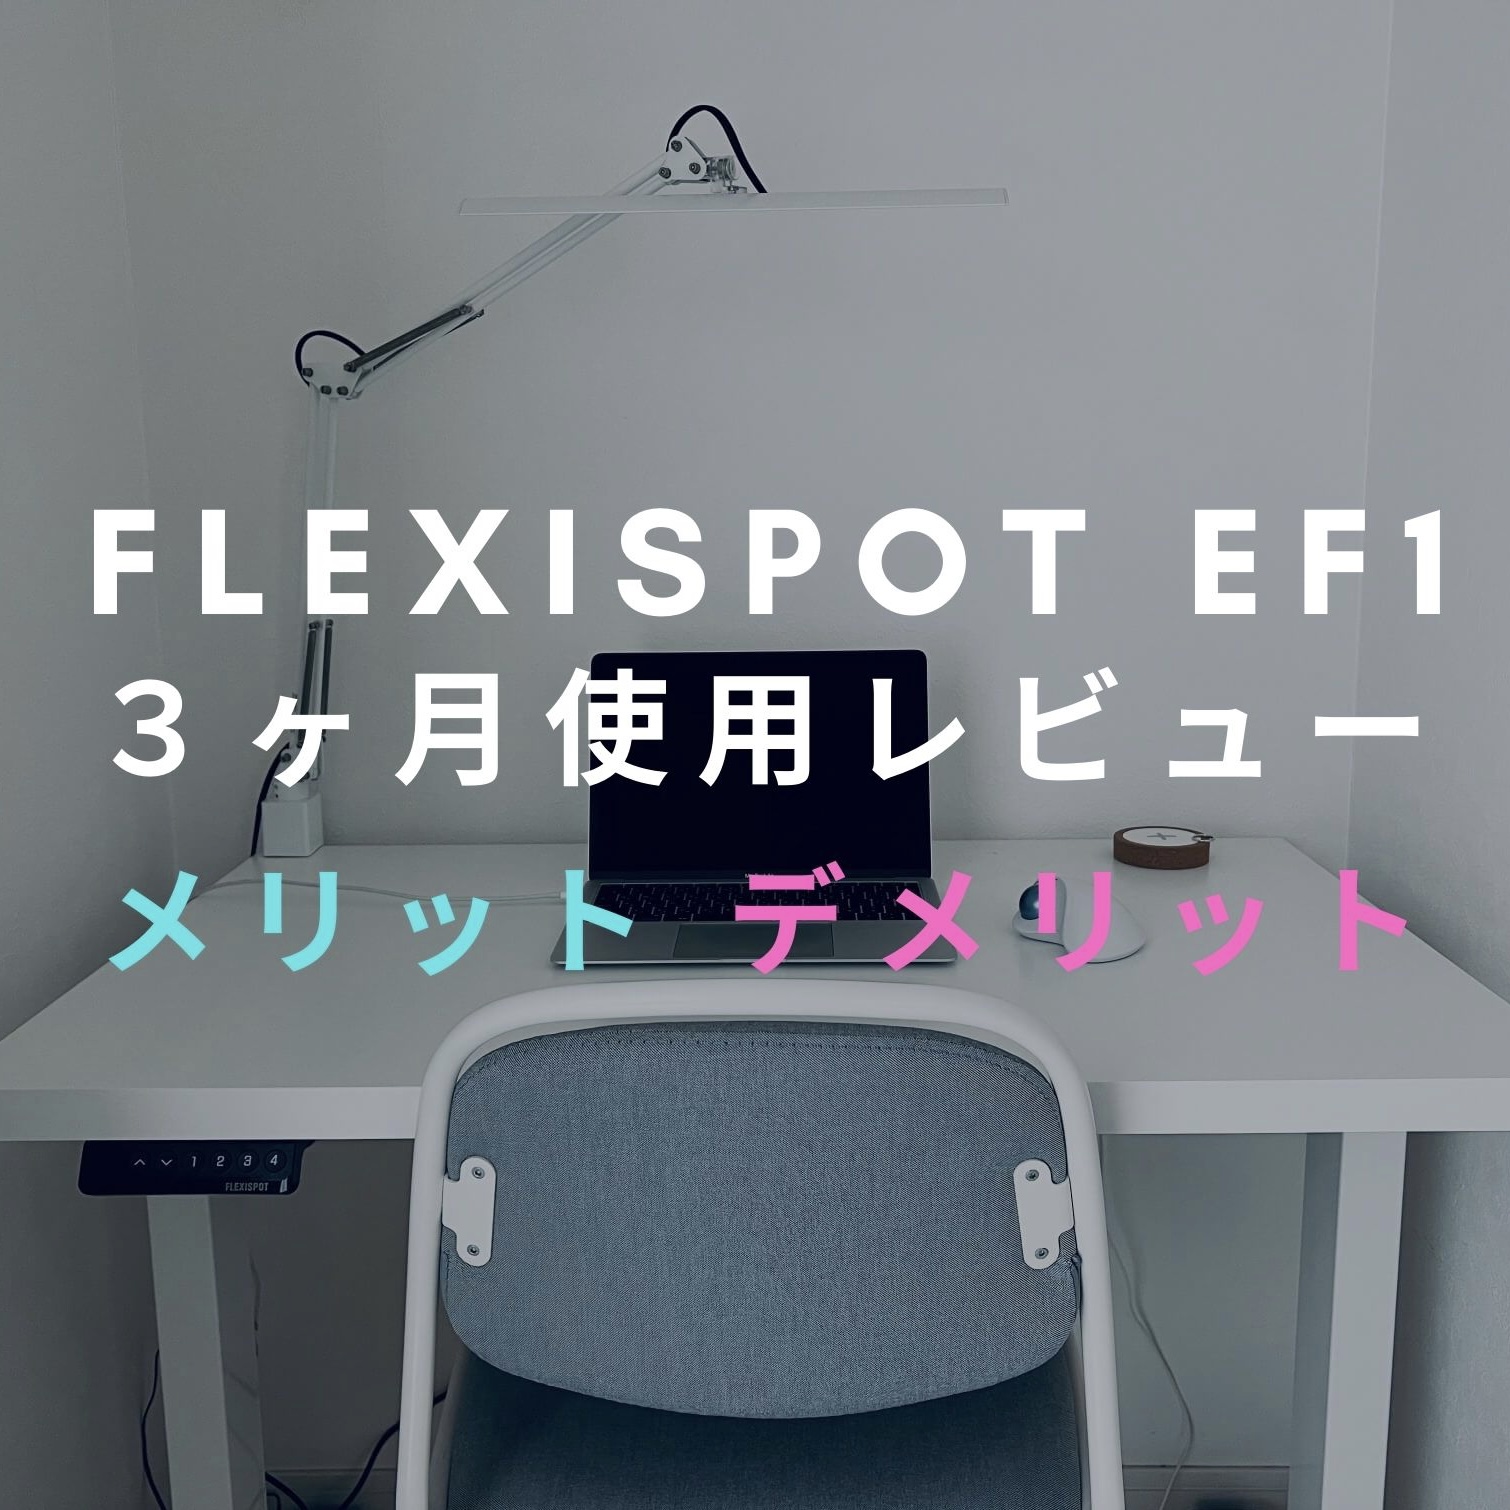 FLEXISPOT EF1 3ヶ月使用した感想とレビュー「メリット・デメリット」